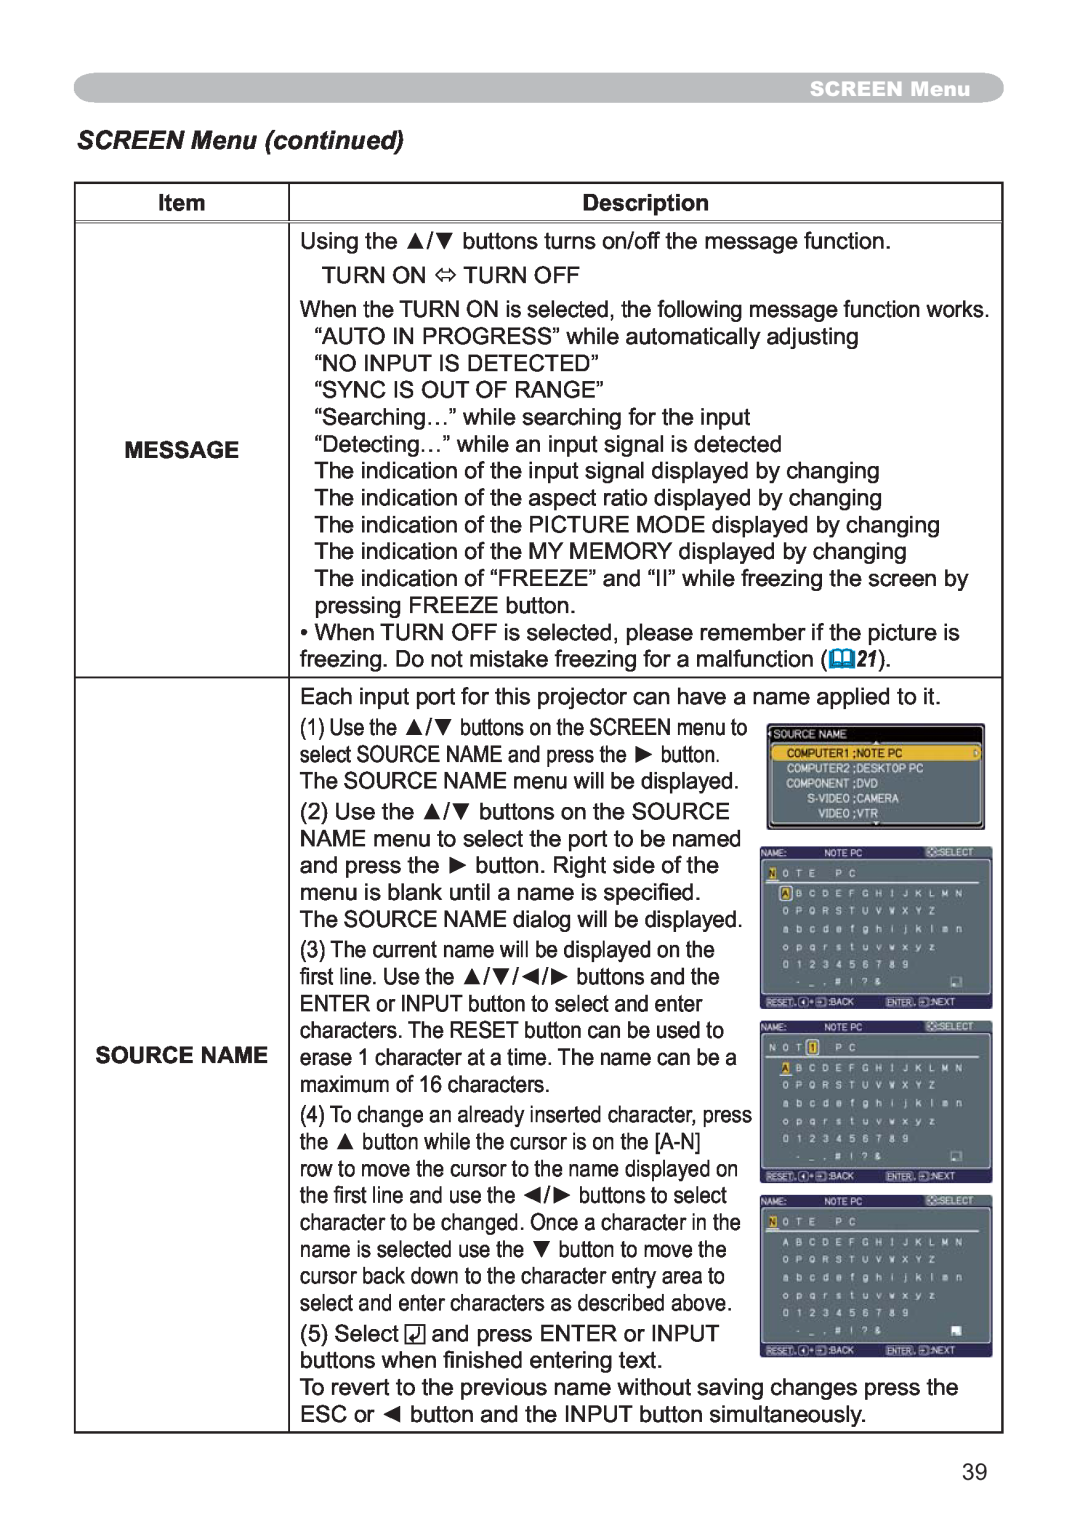 Hitachi ED-X32 user manual Message, Source Name, SCREEN Menu continued, Description 